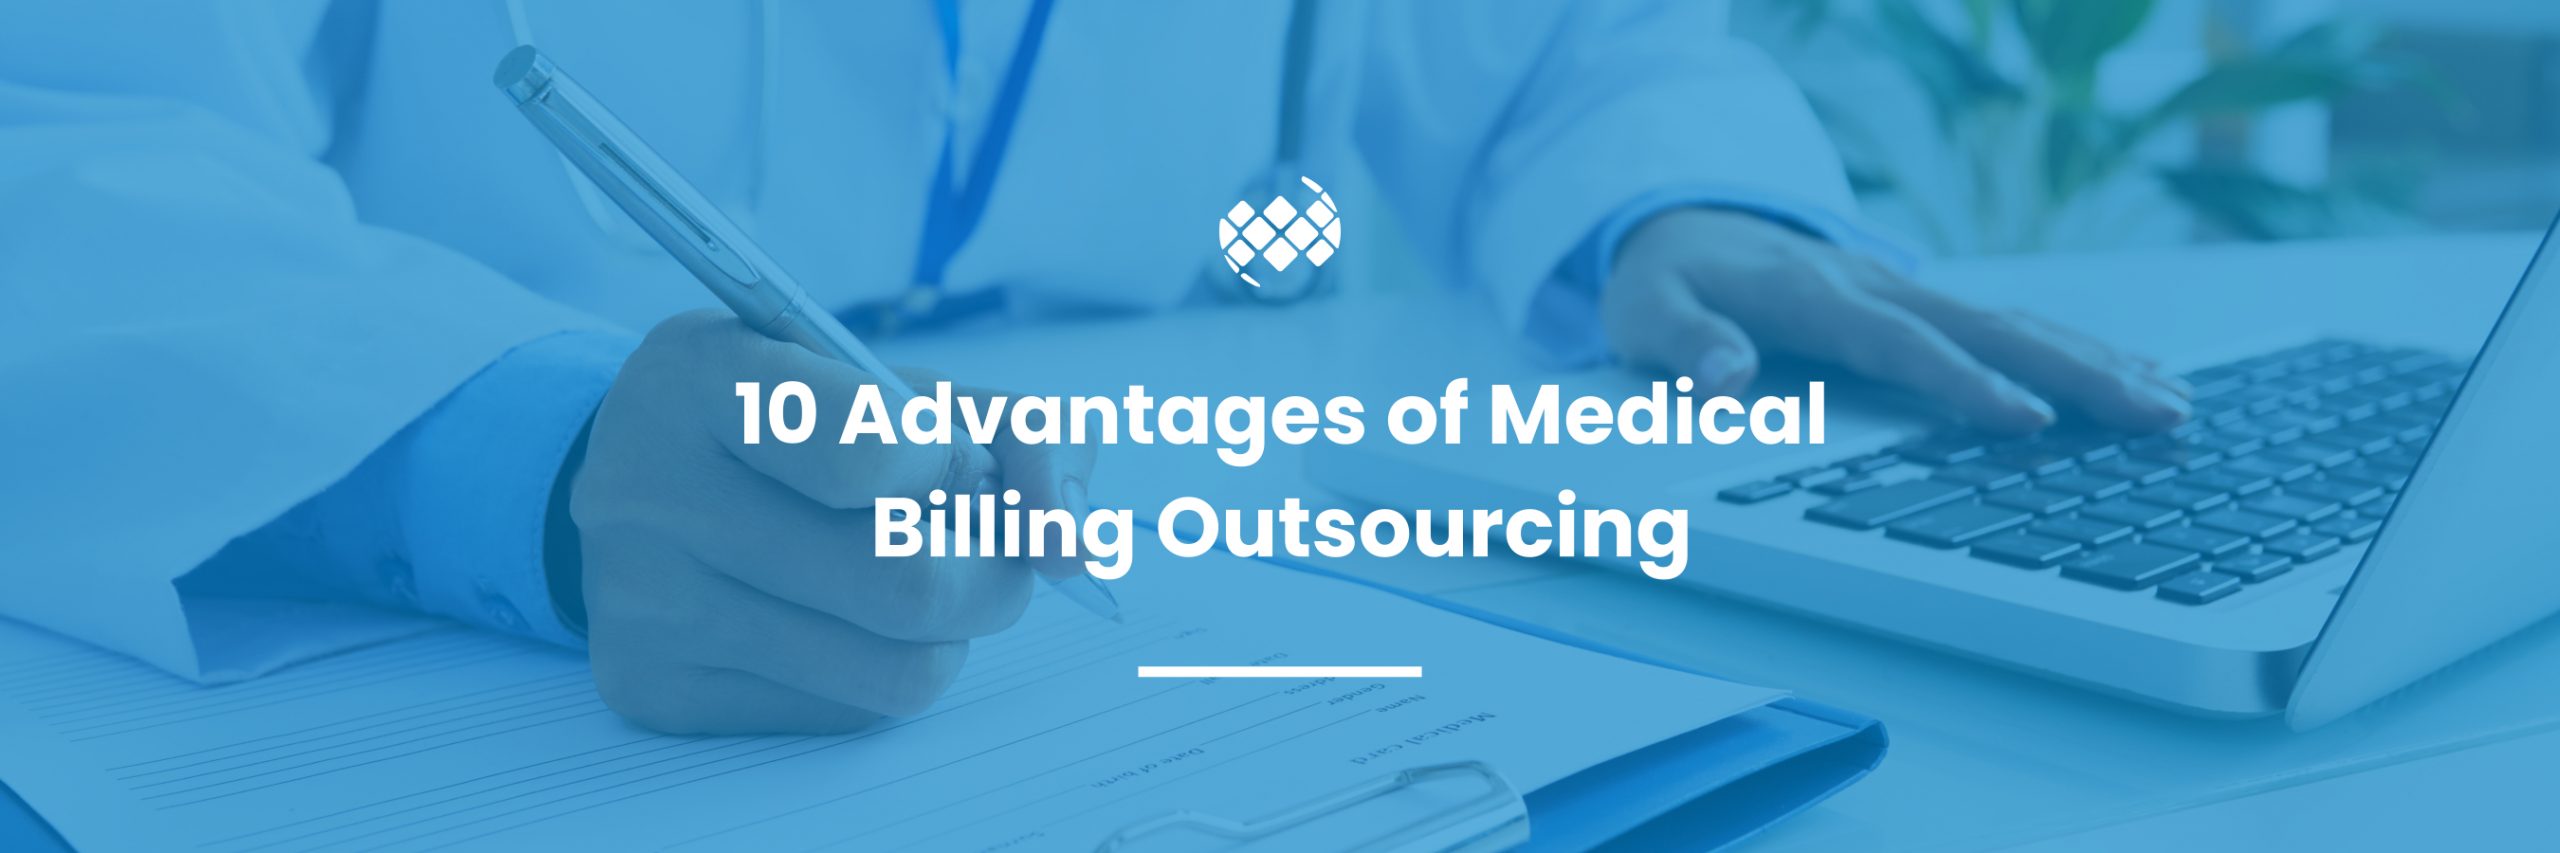 advantages of medical billing outsourcing